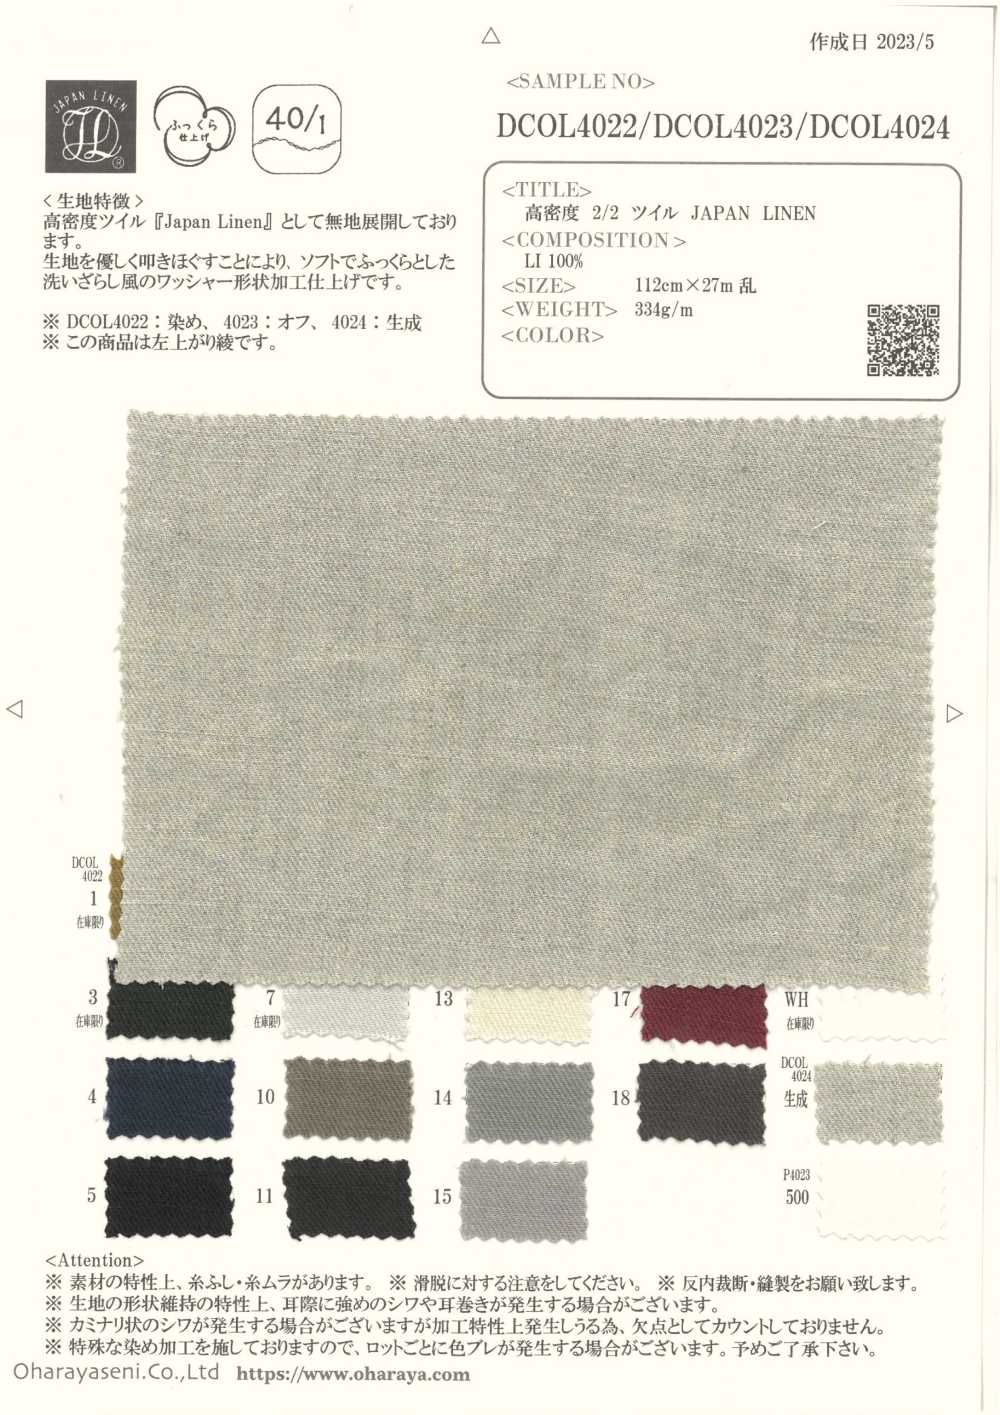 DCOL4023 Hochdichtes 2/2-Twill-JAPAN-LEINEN[Textilgewebe] Oharayaseni